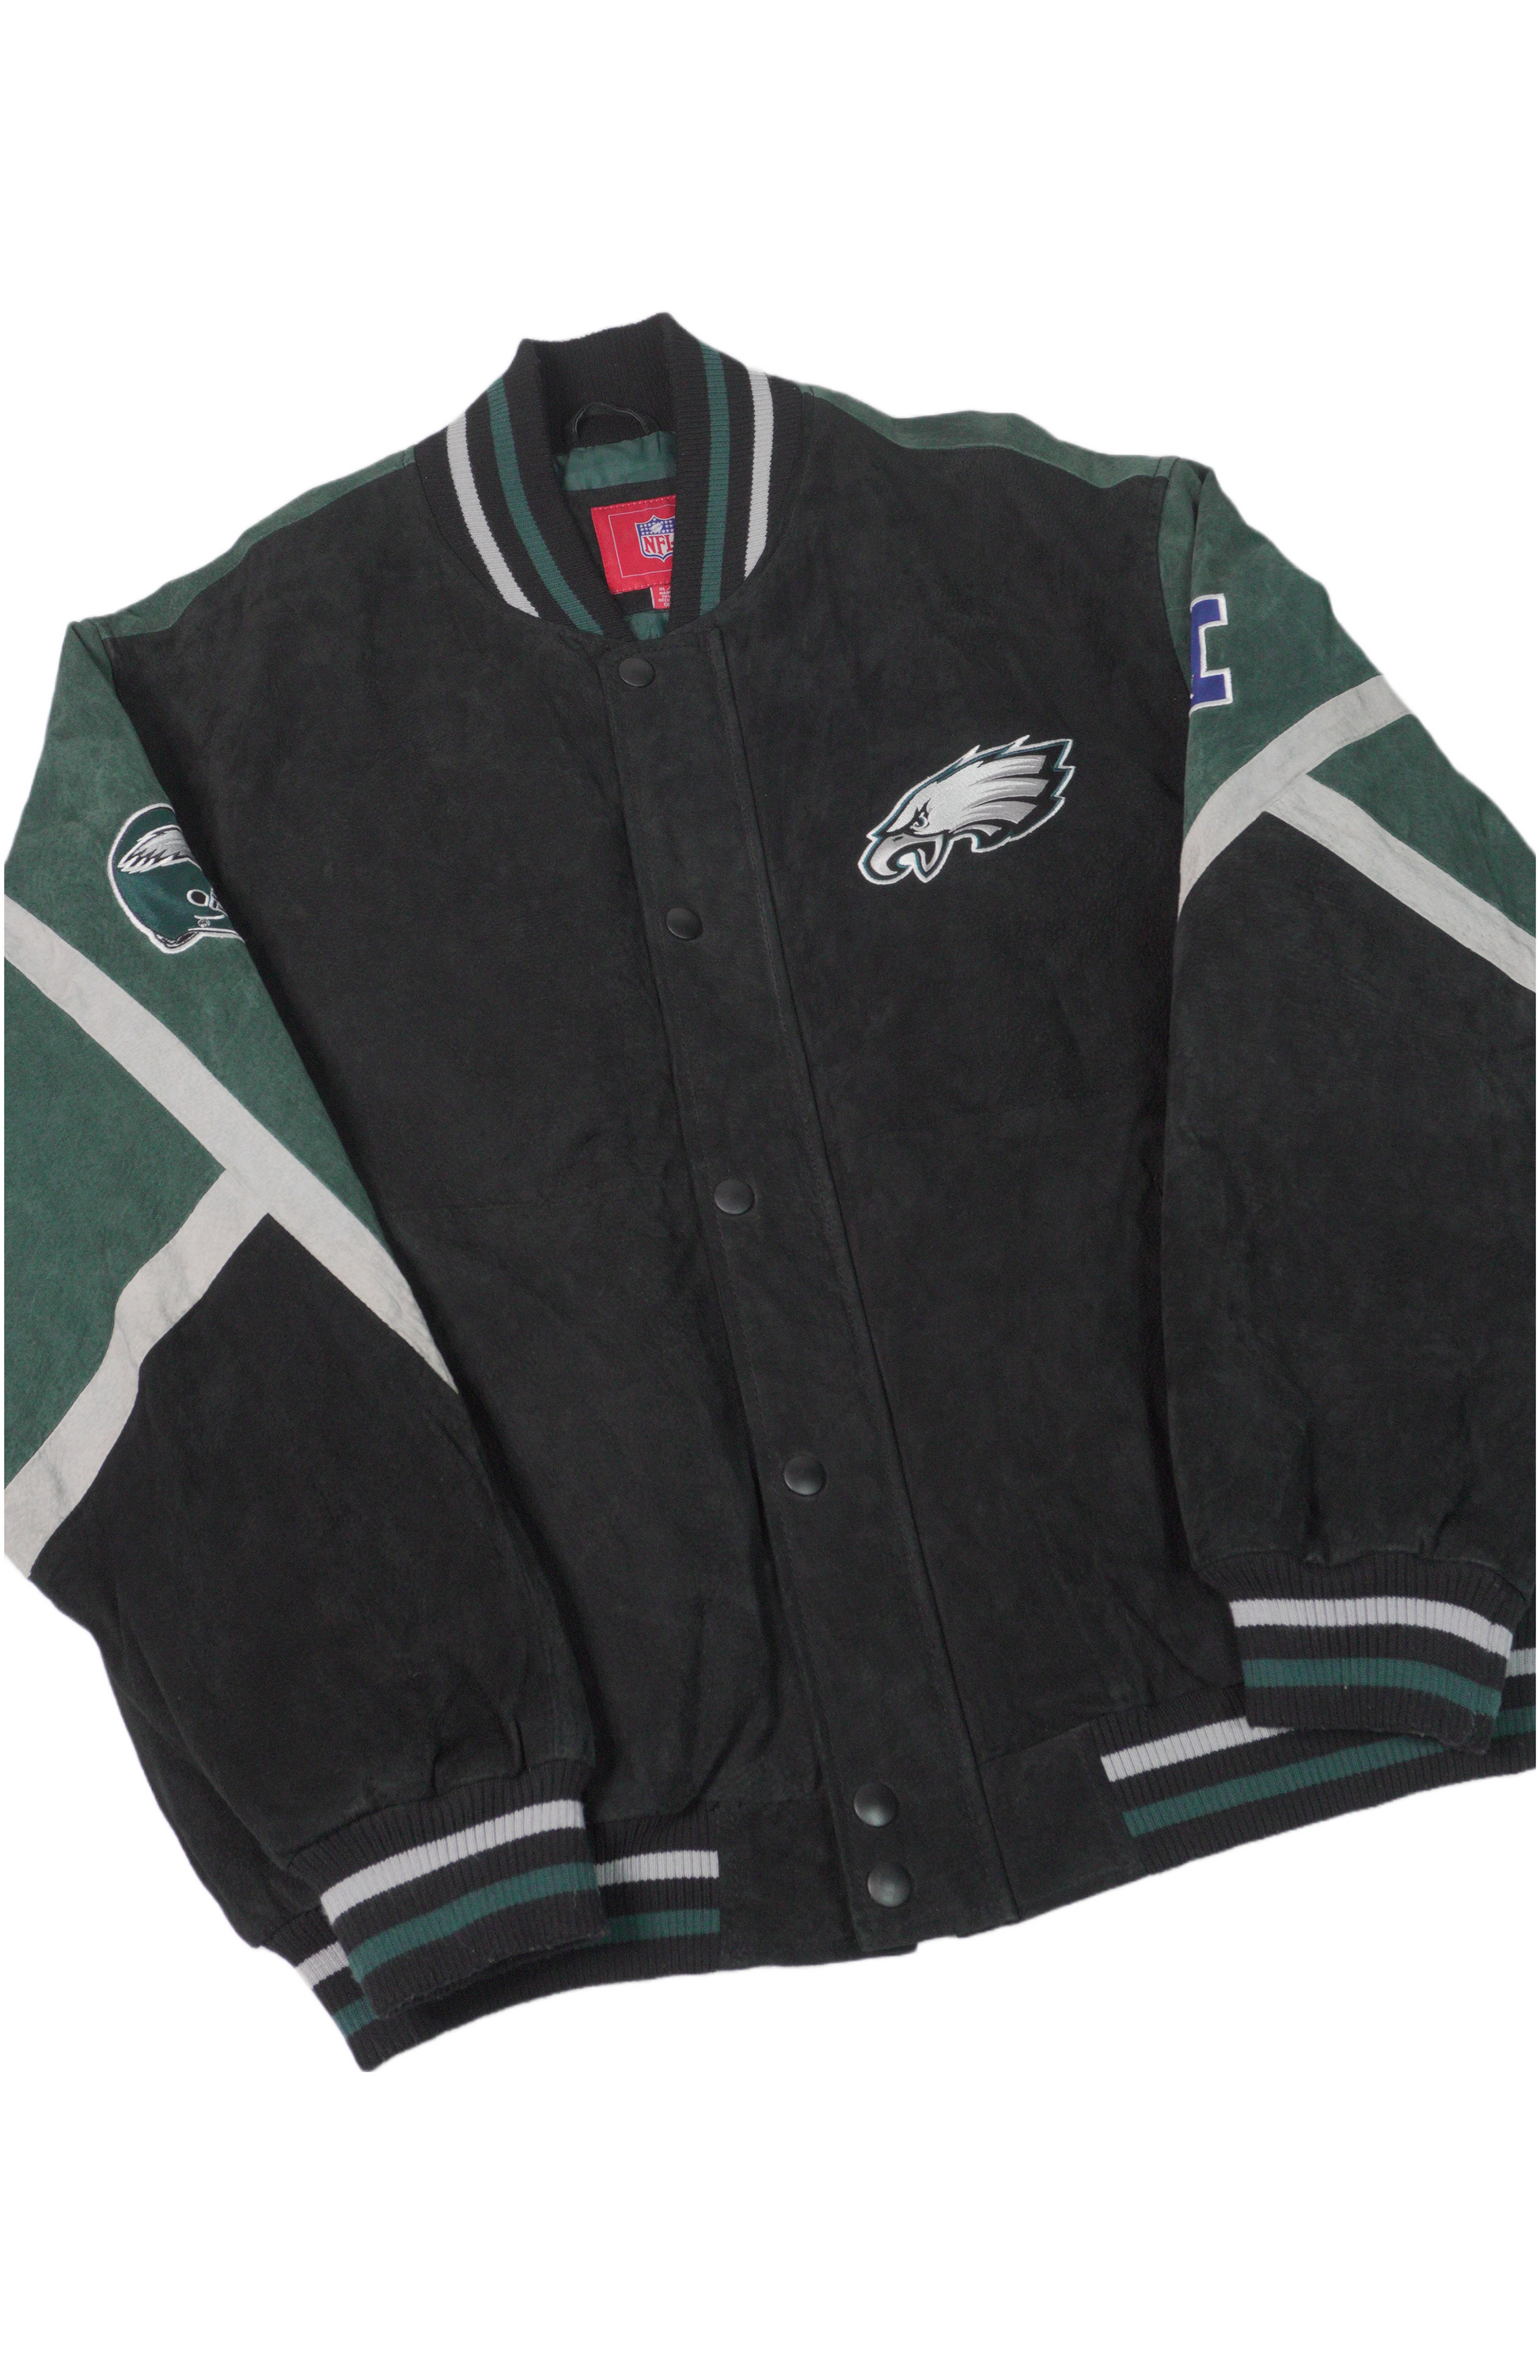 XL Vintage Philadelphia Eagles Jacket -  Denmark